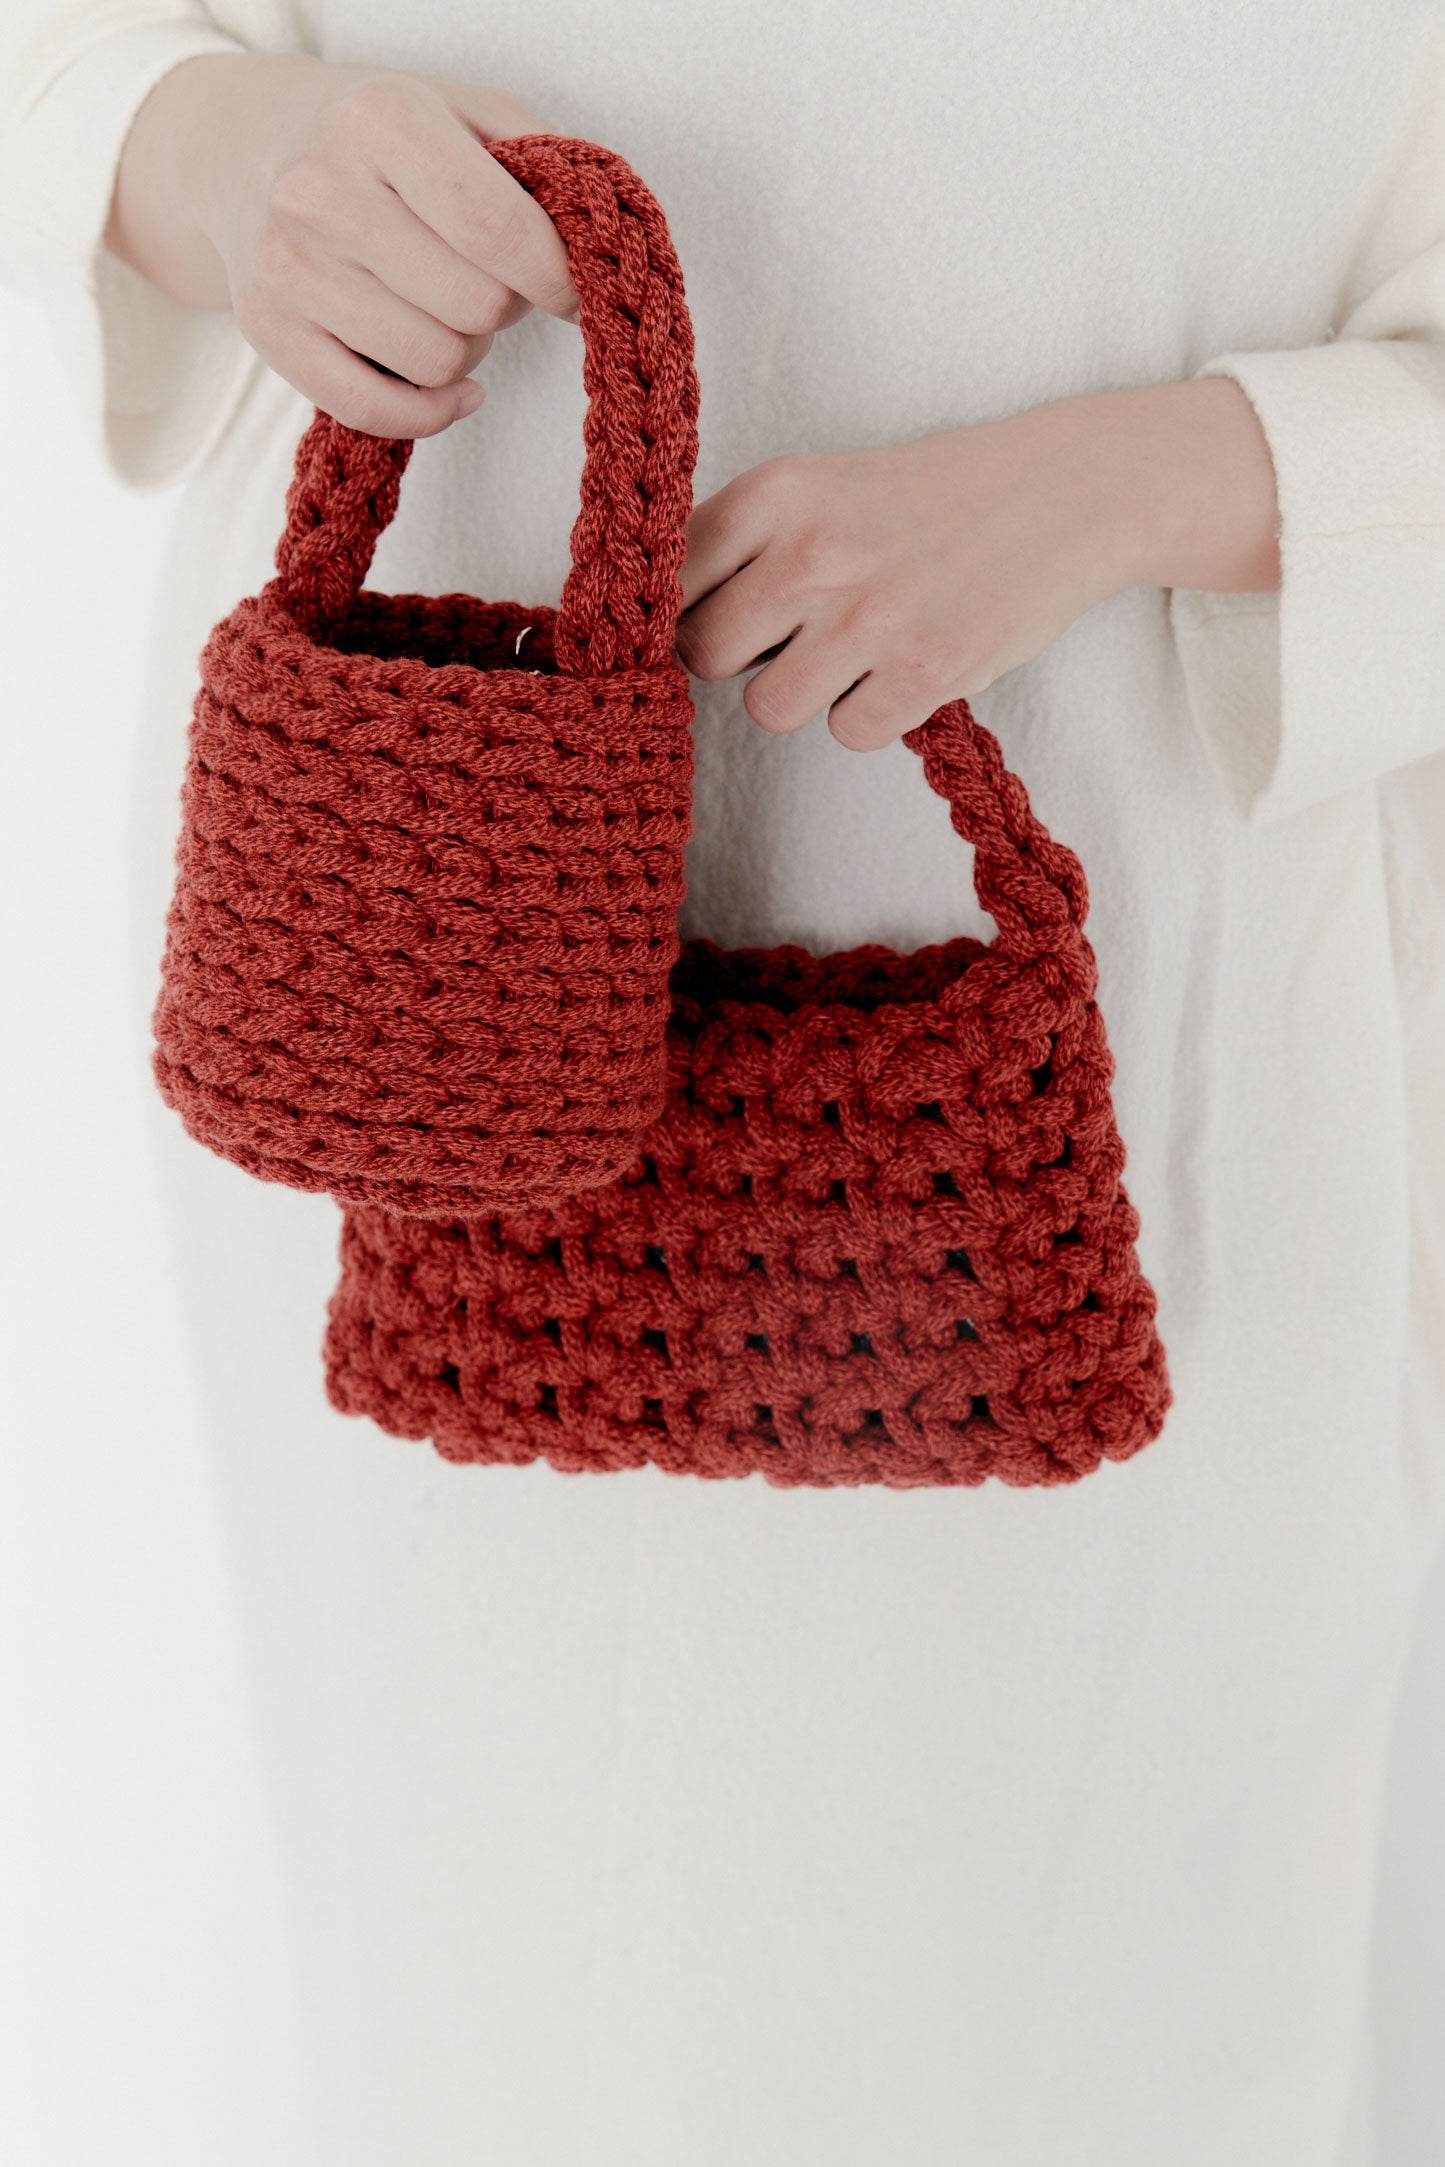 Knots bag 2 - Red